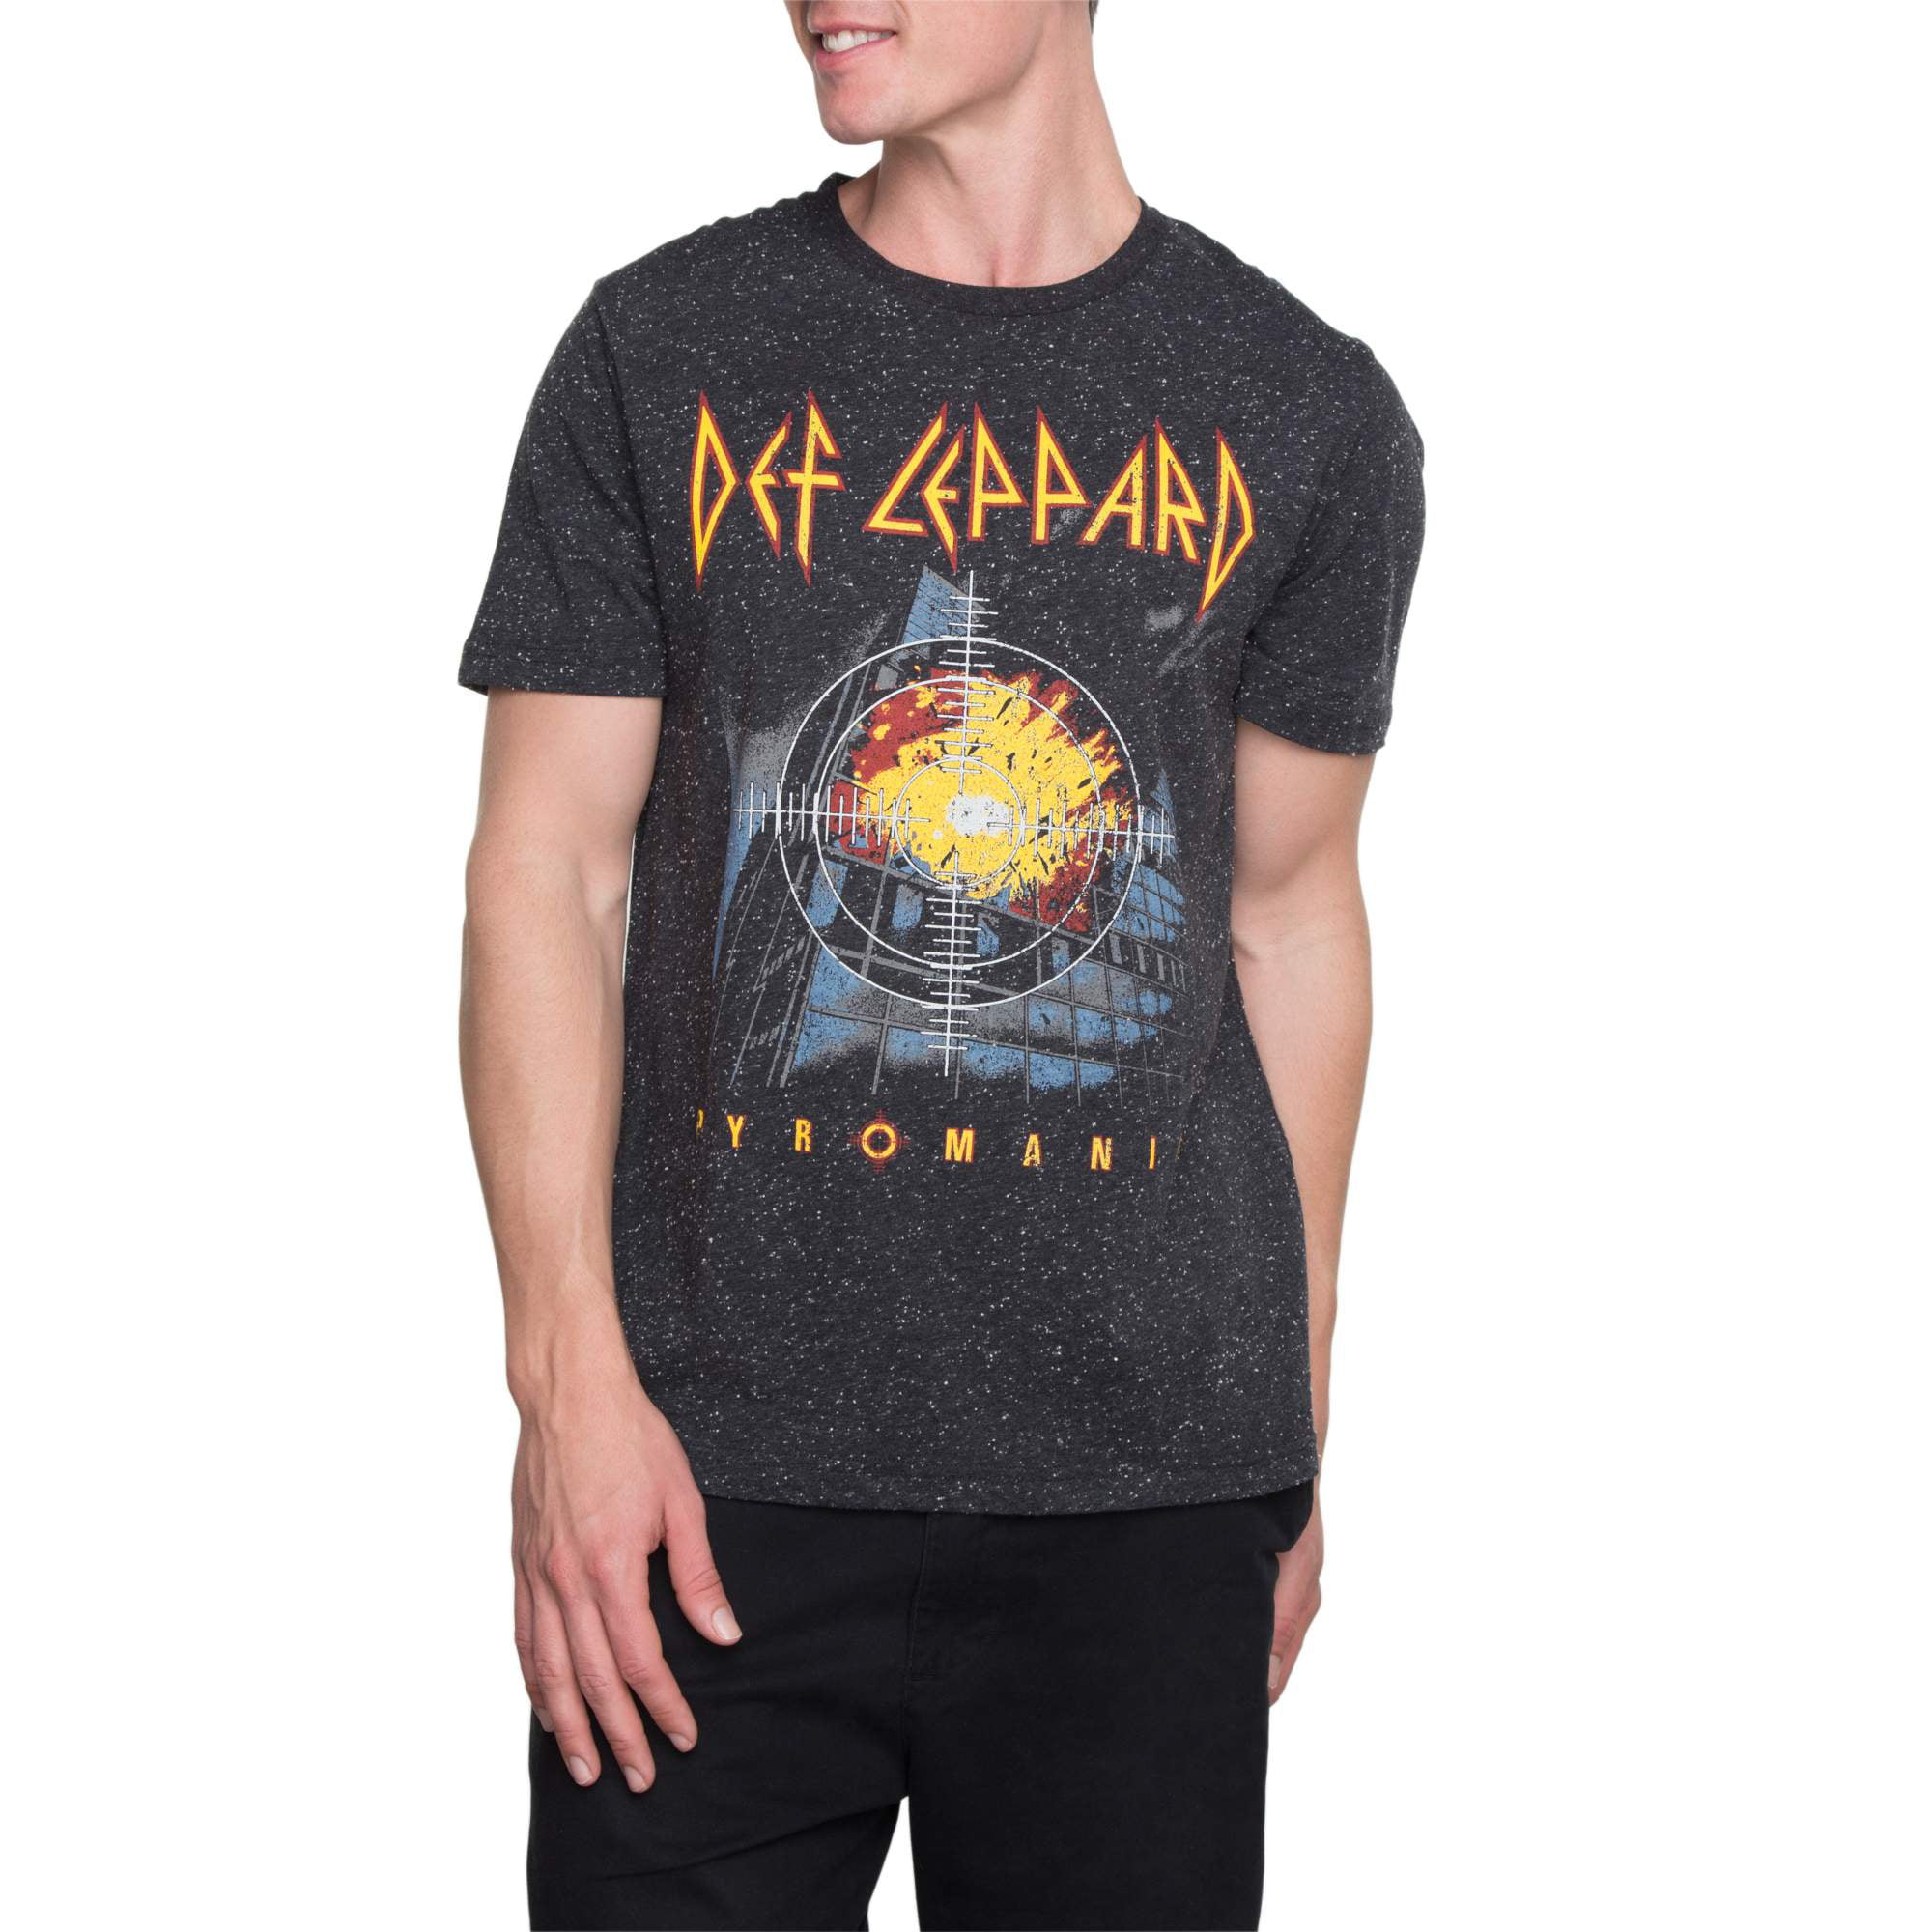 Def Leppard Pyromania Rock Band Legend Men's Black T-Shirt Size S to 3XL 